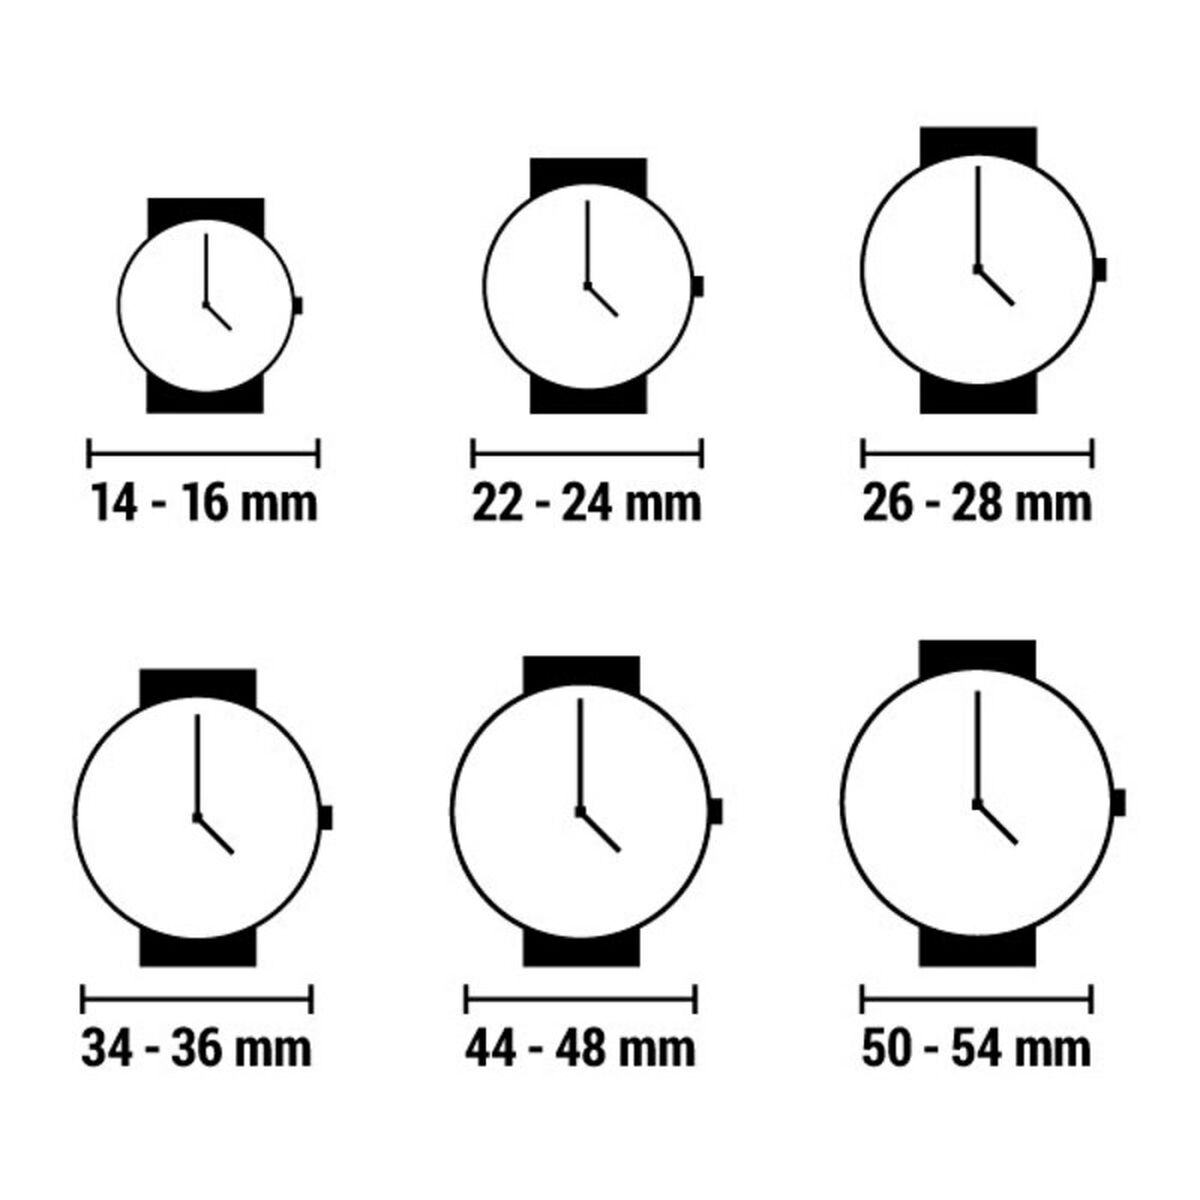 Horloge Heren Radiant RA444601 (Ø 45 mm)